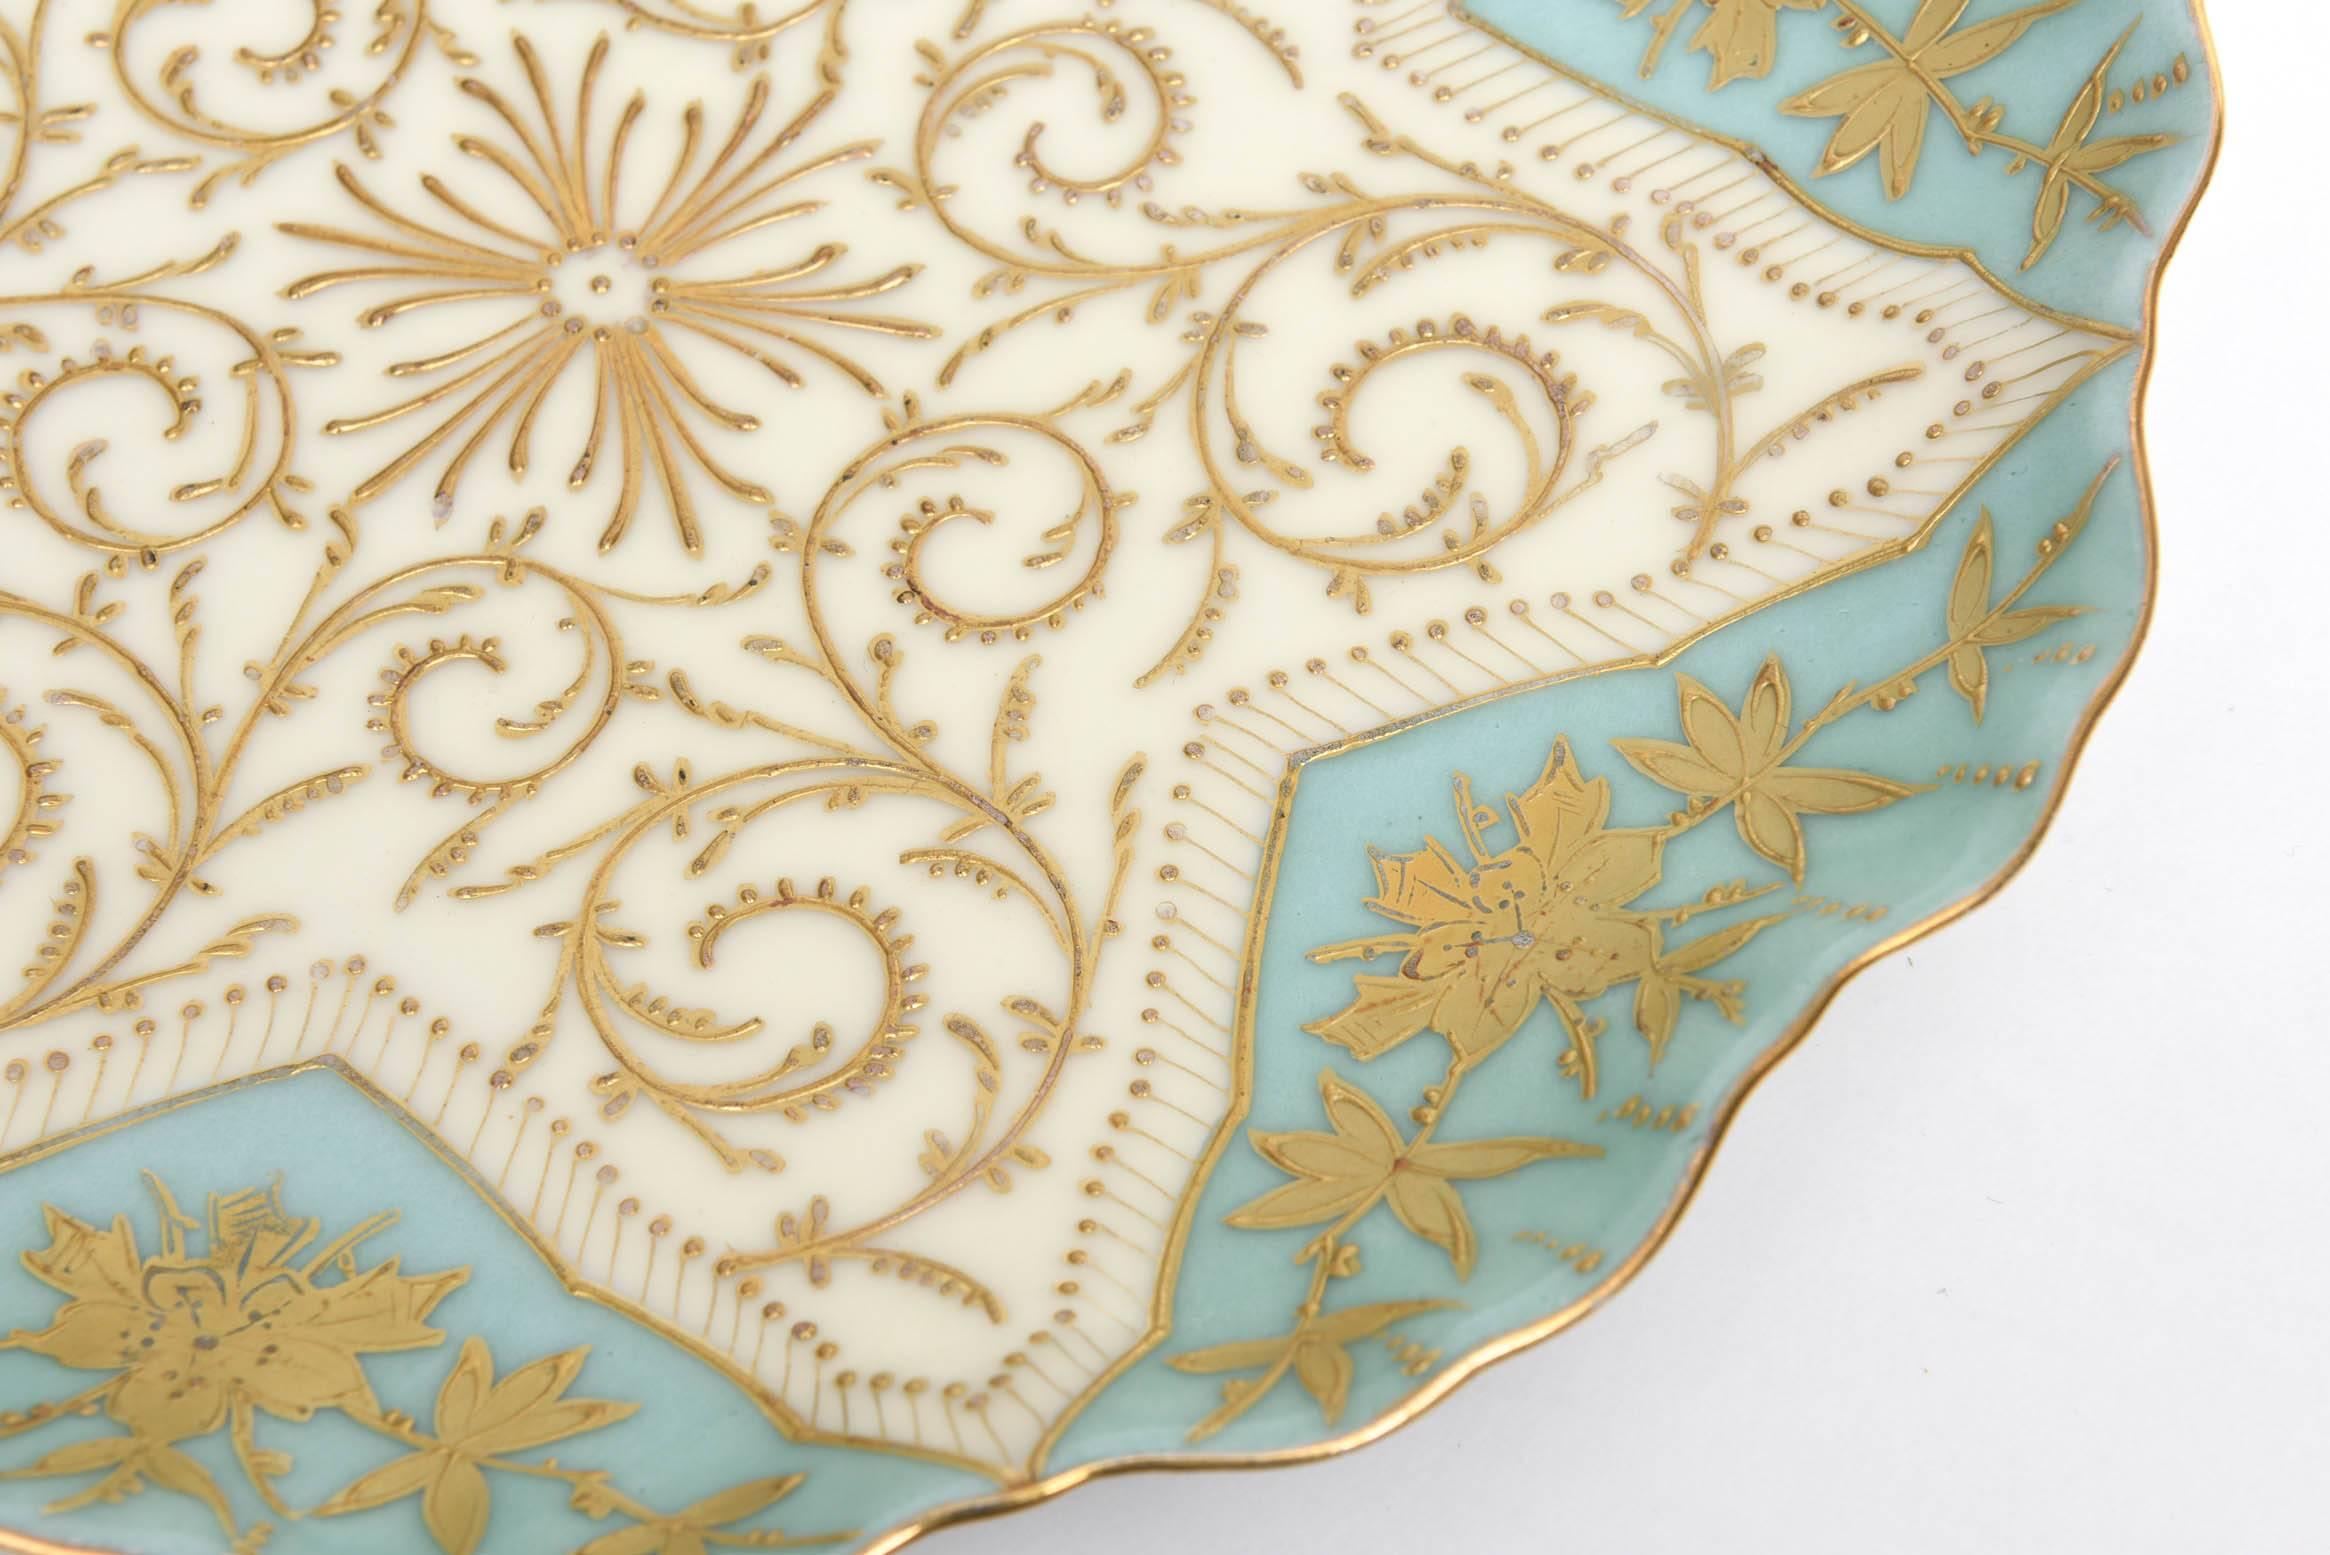 Ten Elaborately Decorated Turquoise Gilt Dessert or Display Plates, 19th Century 1